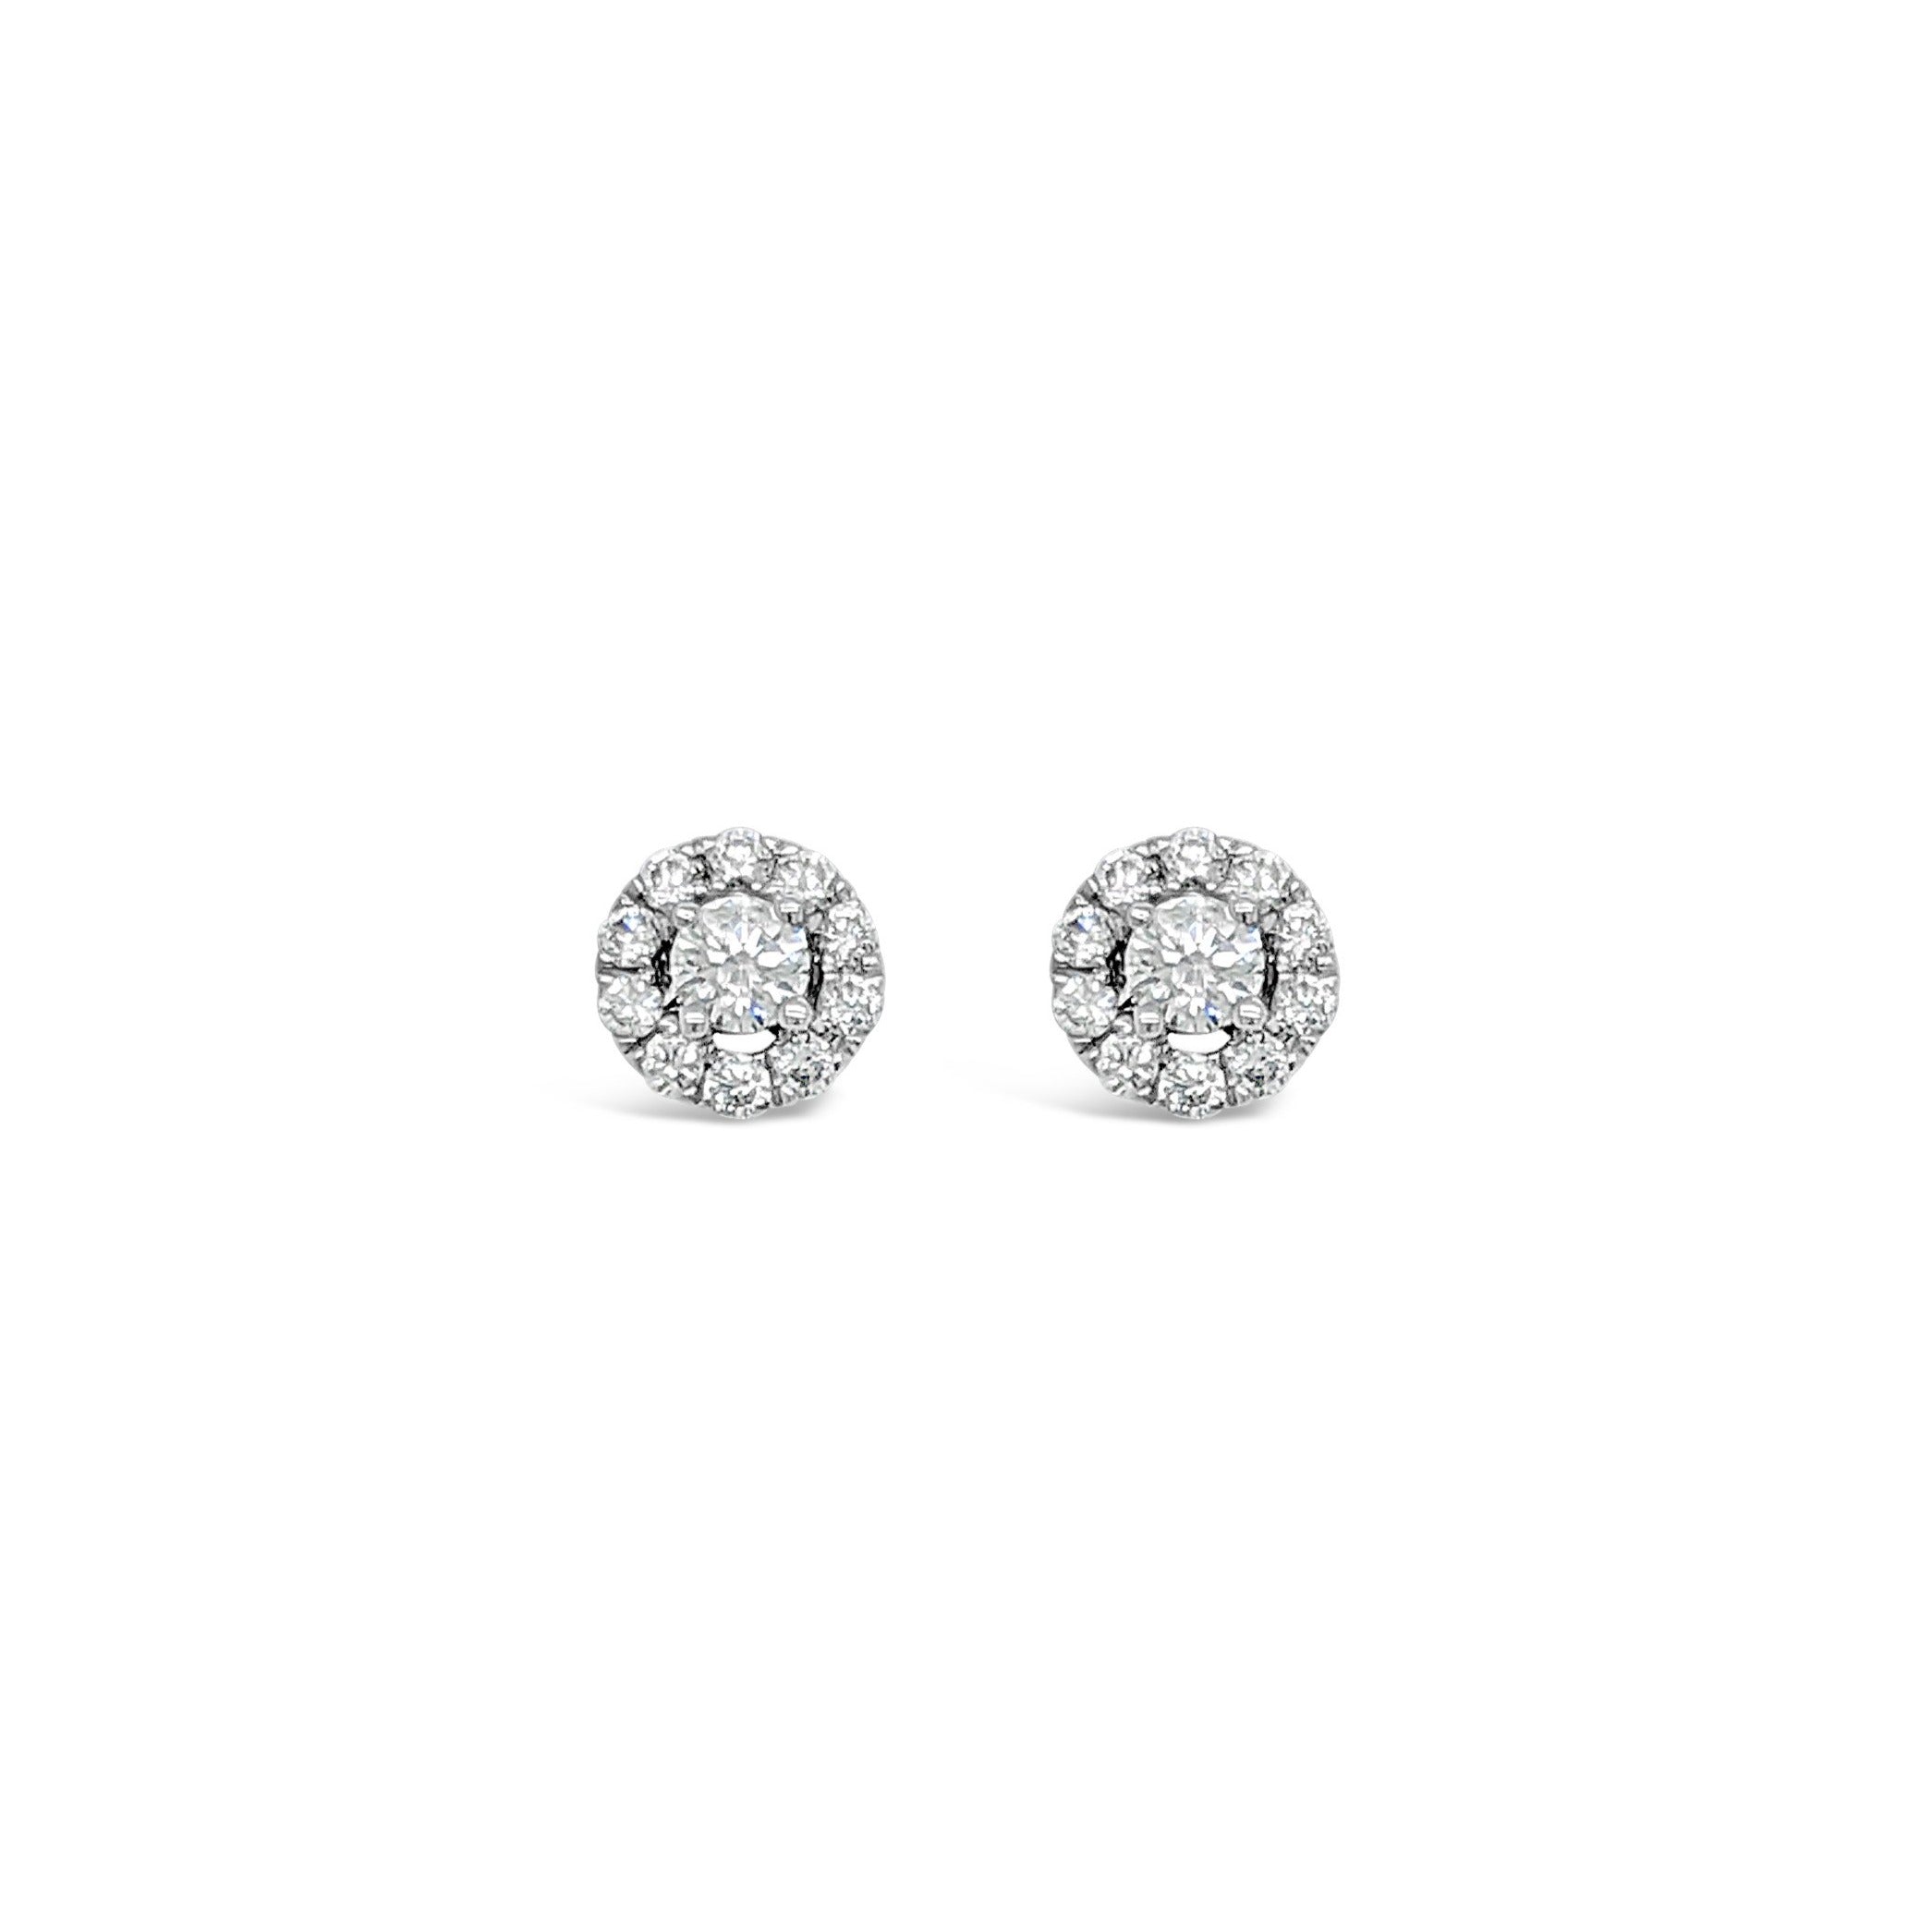 White diamond halo earrings 0.17ct centre